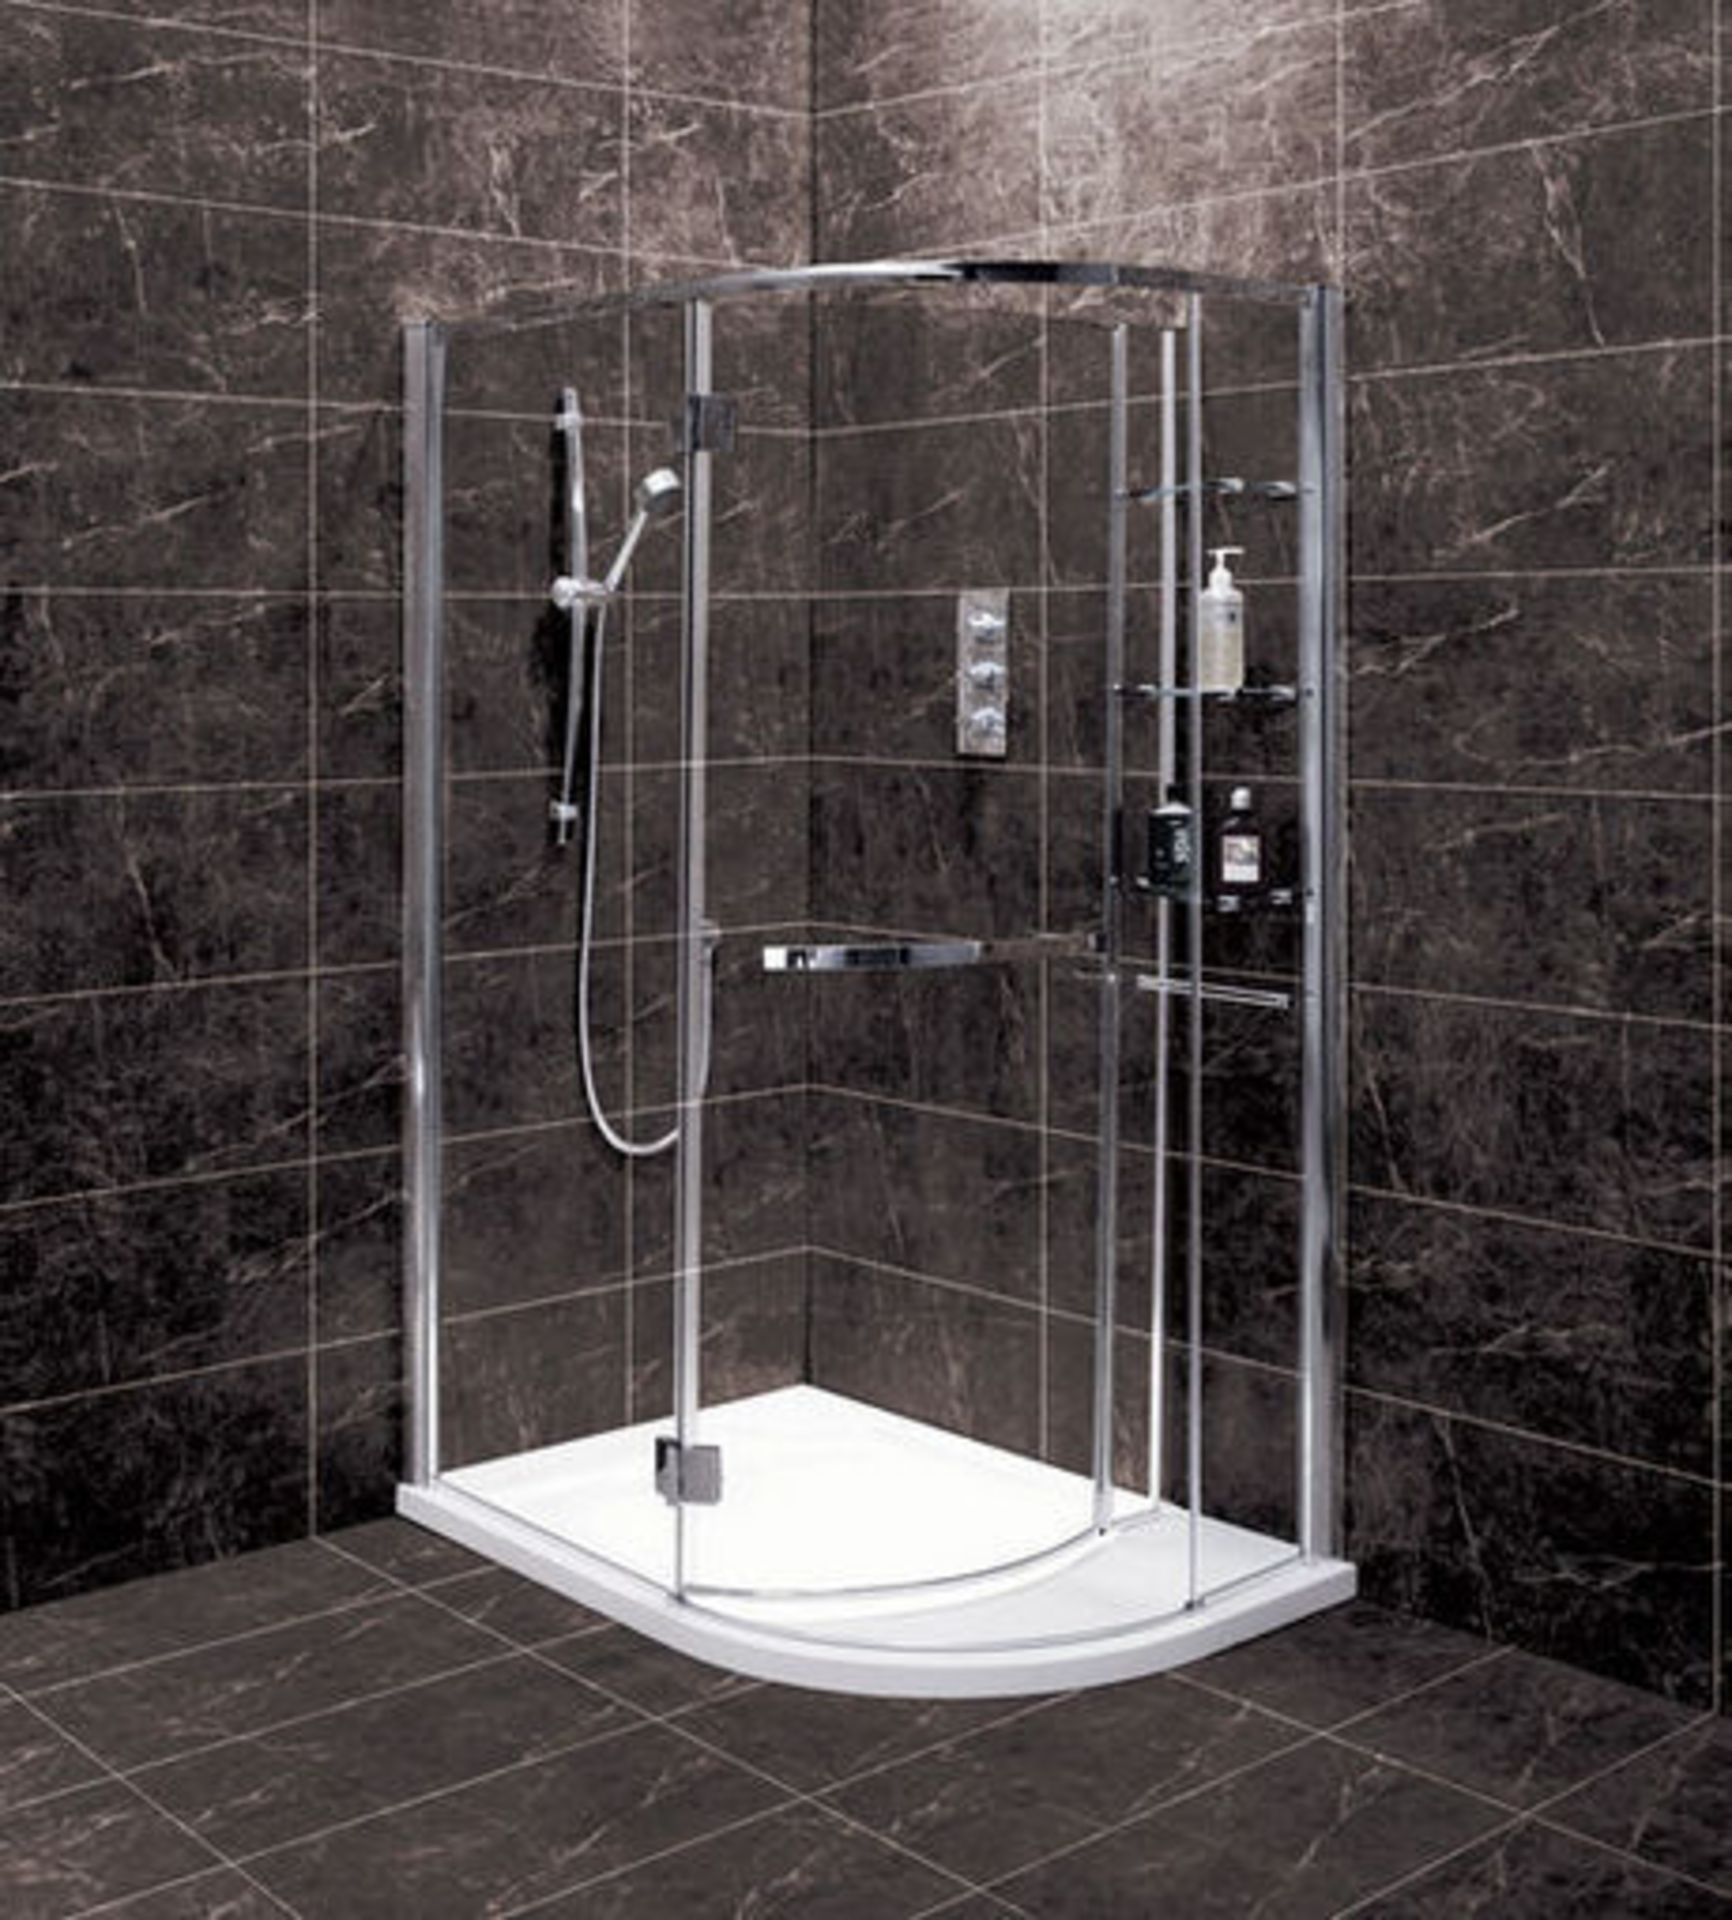 1 x Vogue Tetris Aqua Lotus Left Hand Shower Enclosure With Slimstone Stone Resin Low Profile Shower - Image 4 of 8